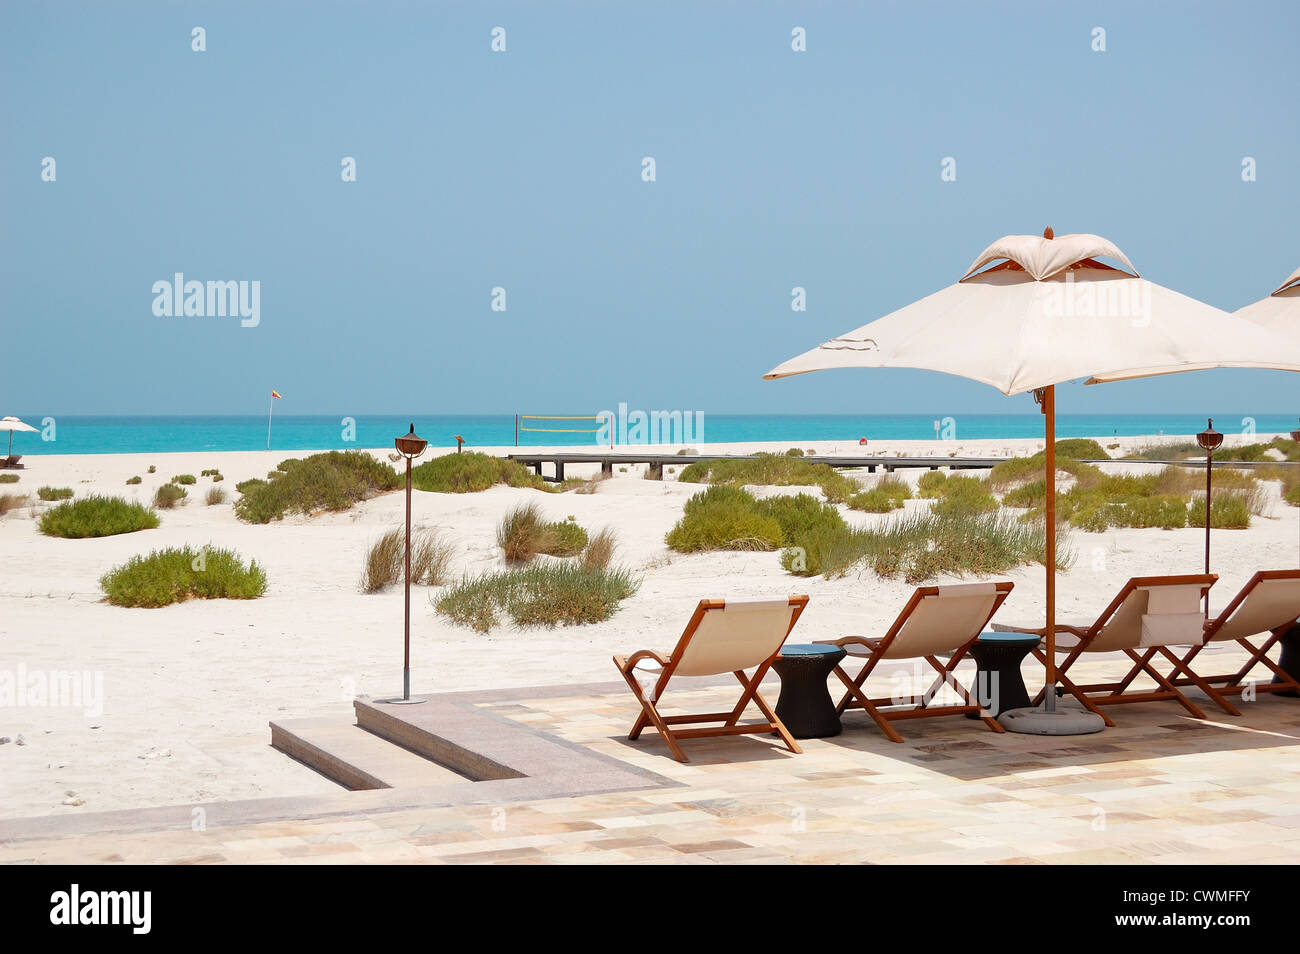 Sunbeds and umbrellas at the beach of luxury hotel, Abu Dhabi, UAE Stock Photo